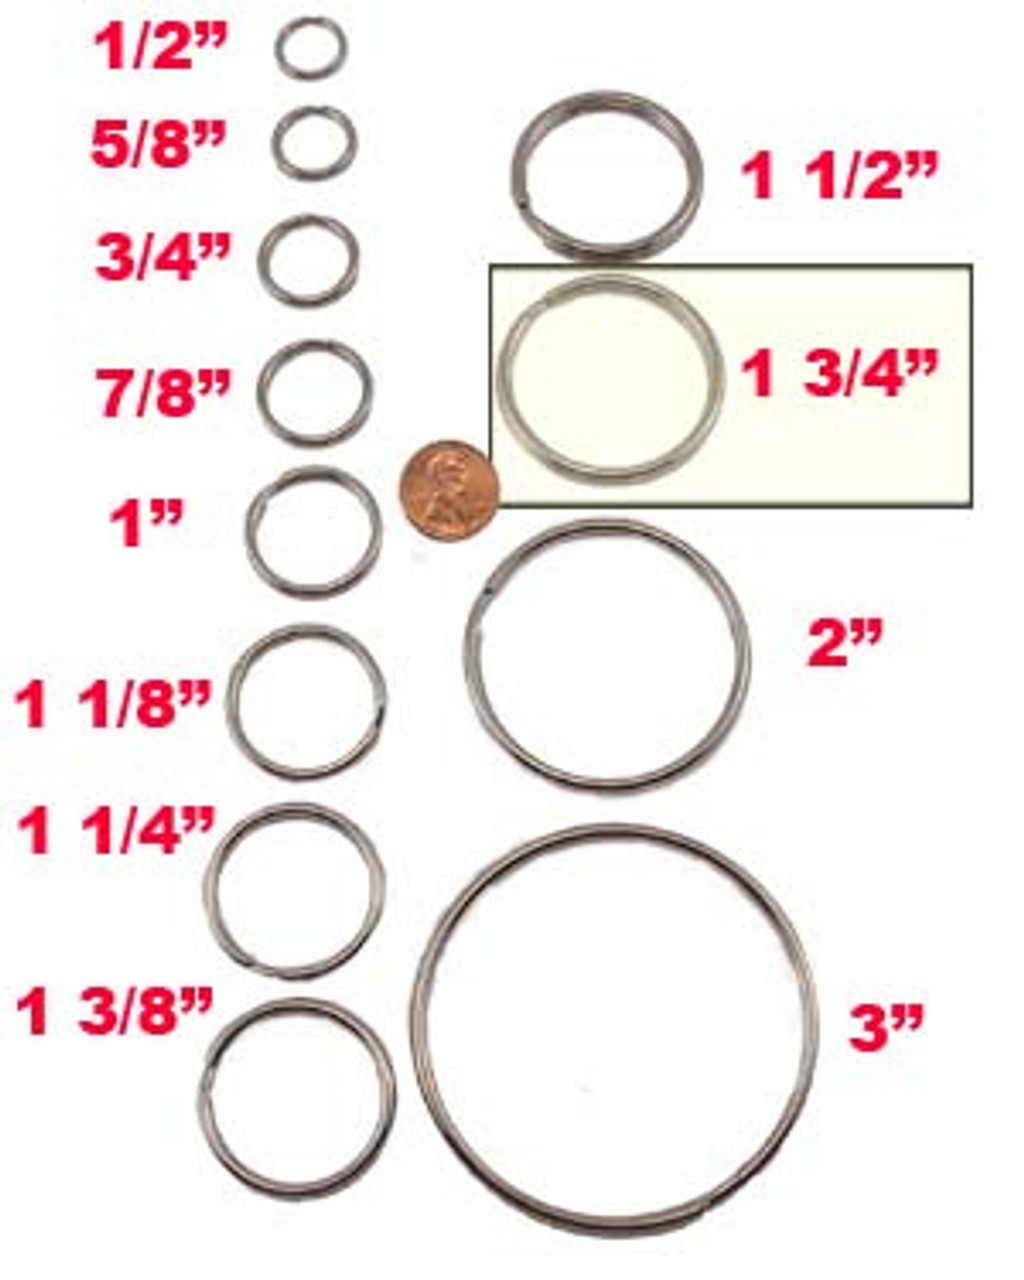 1.75 - 1 3/4 Heavy Duty Split Key Ring, Nickel Plated - USA (10 Pack)